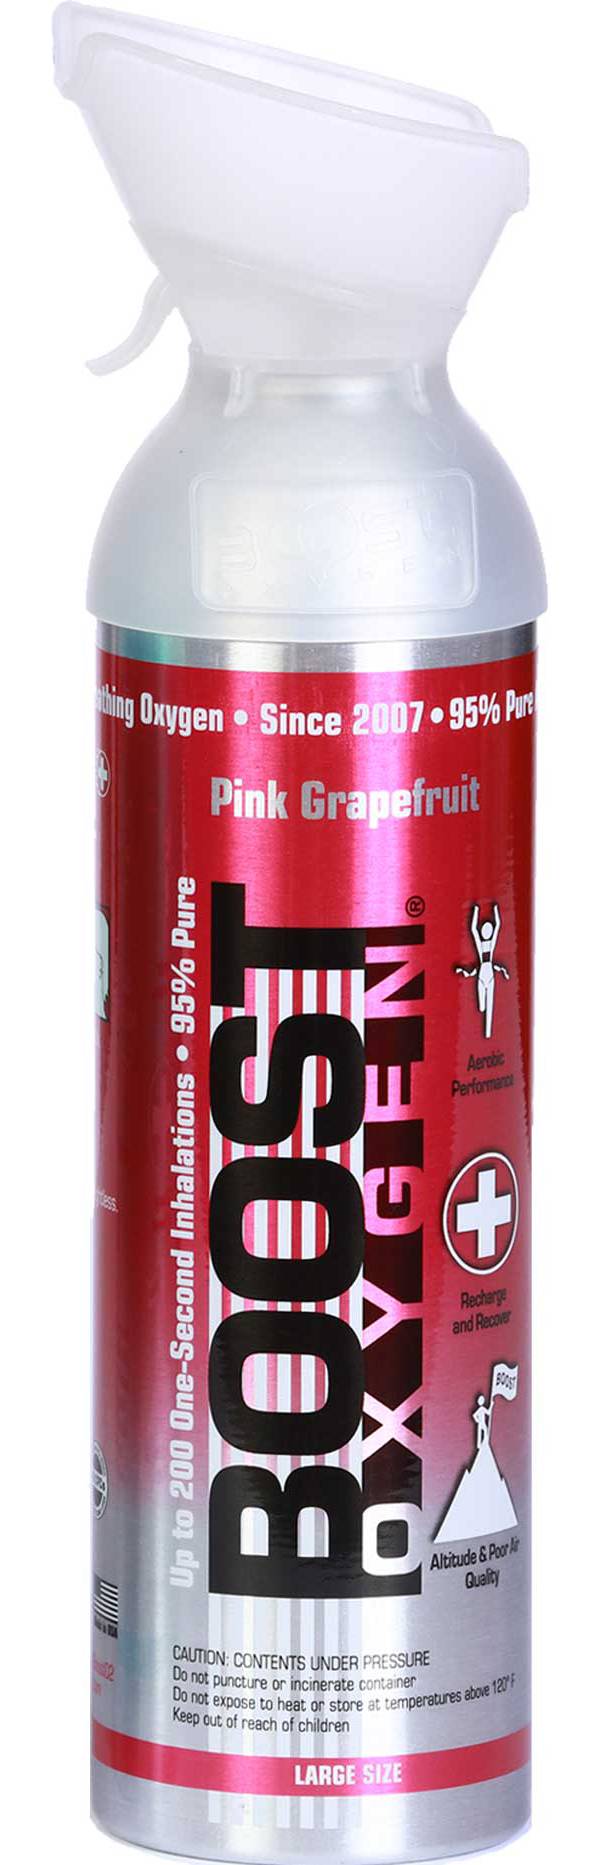 Boost Oxygen 10-Liter Bottle Sports Oxygen Pink Grapefruit product image